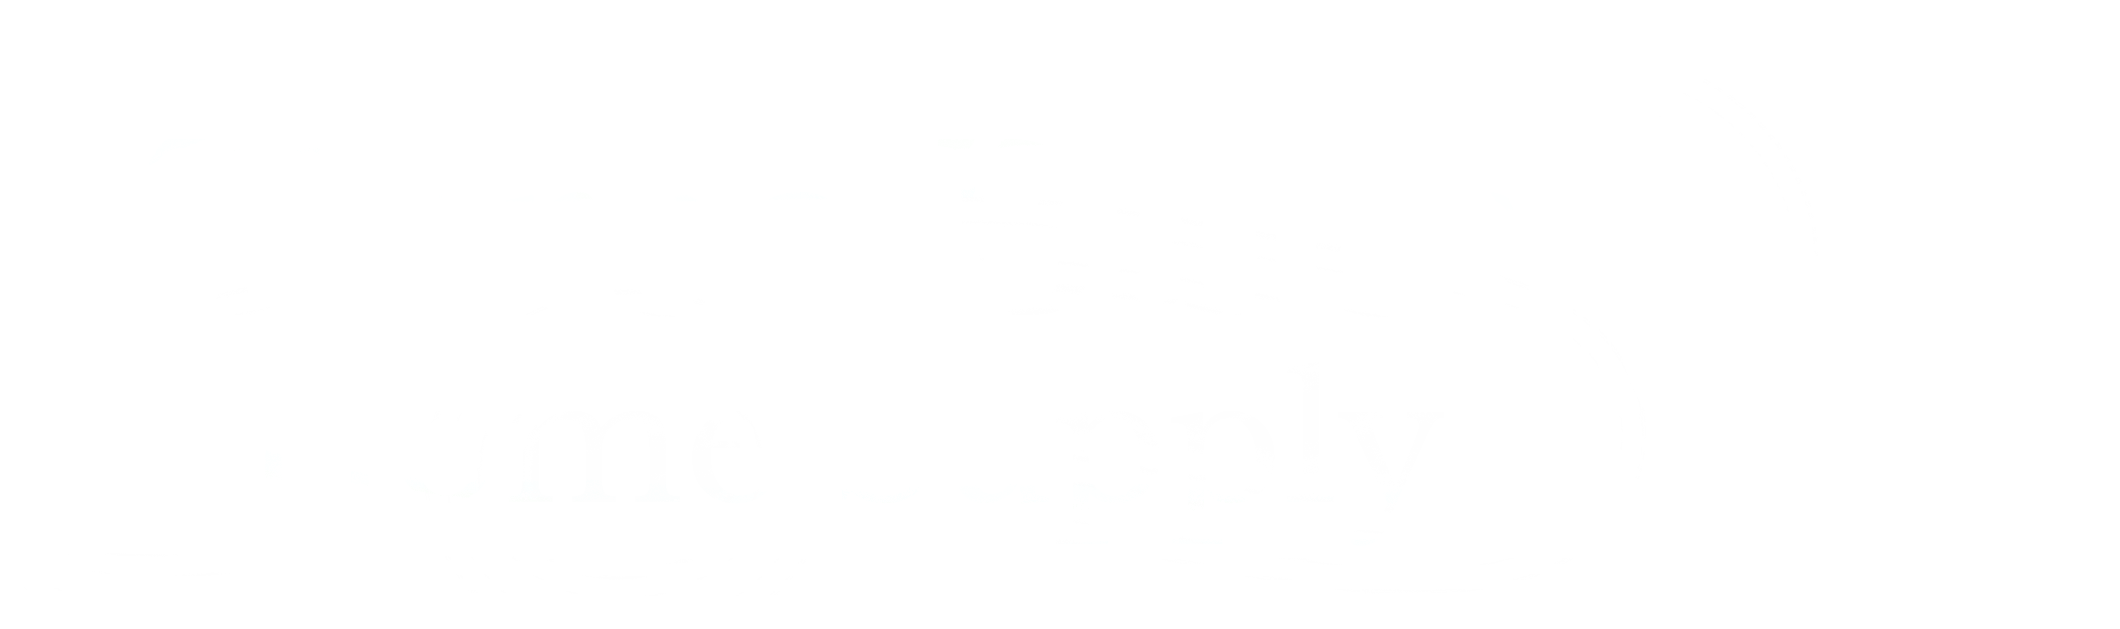 Three Bales Home Supply 